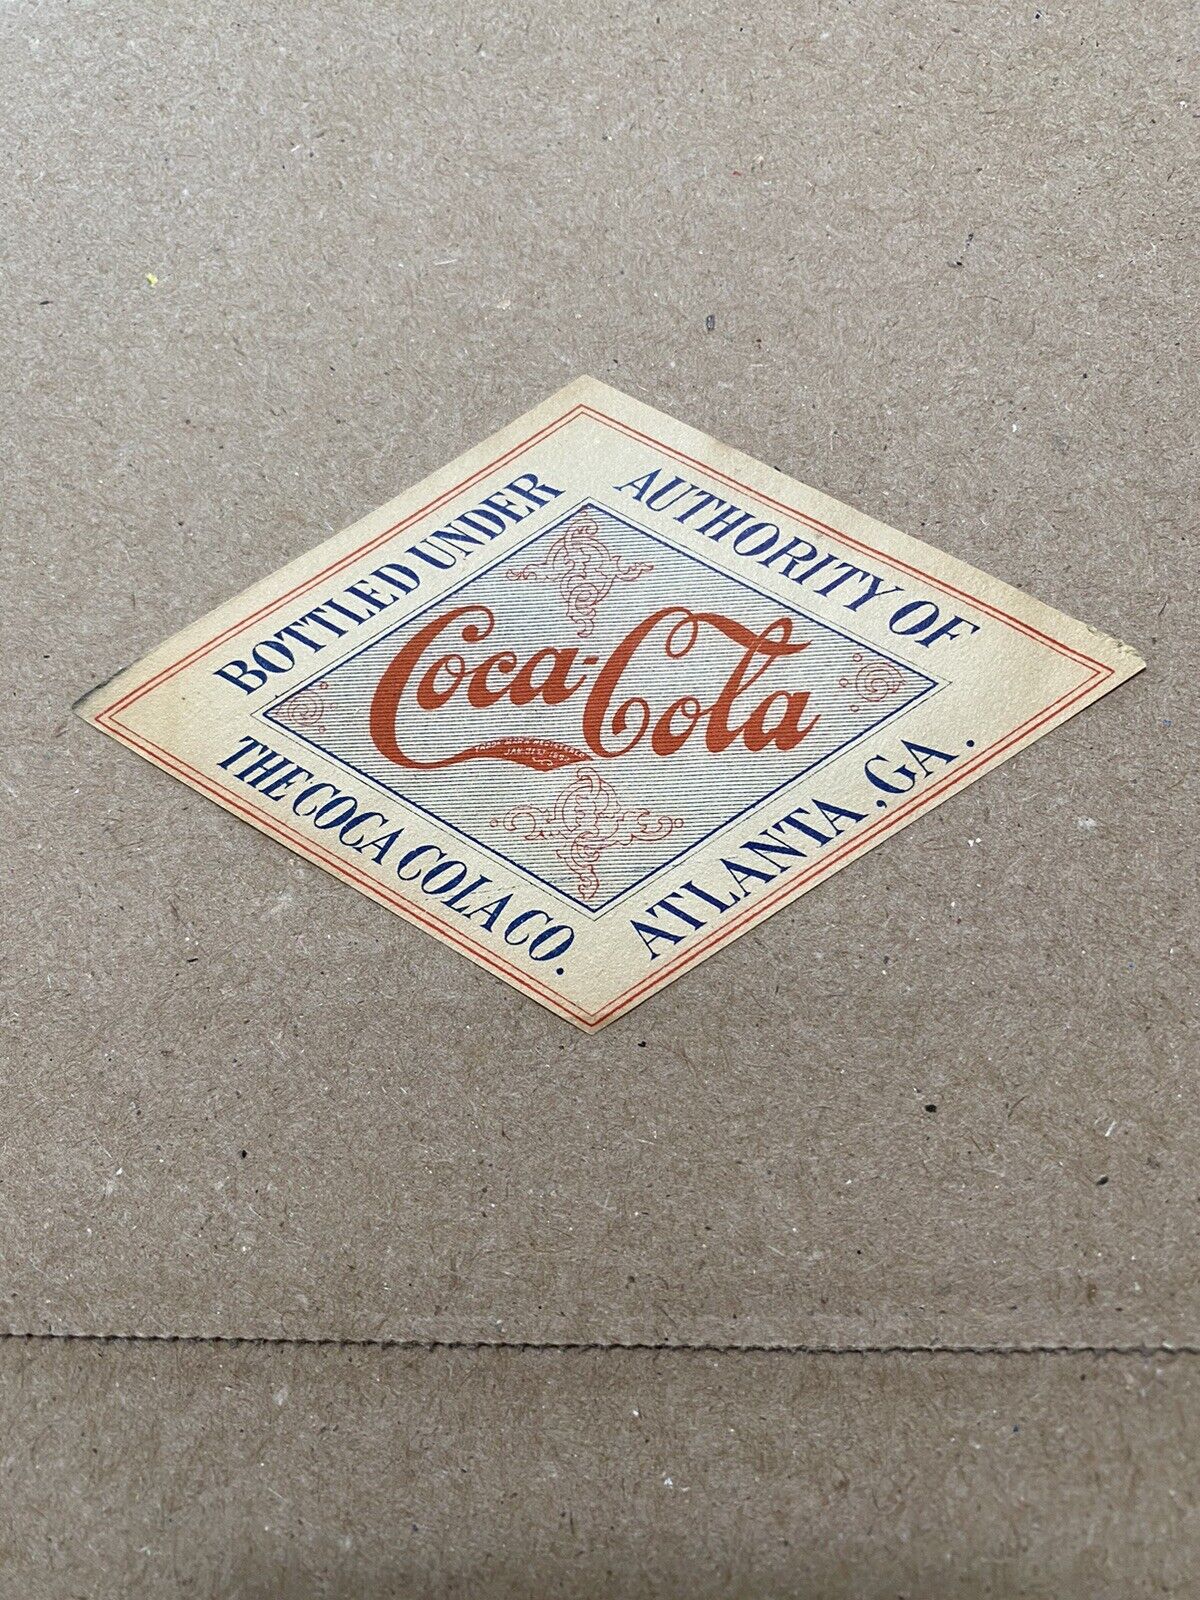 Early Original Coca-Cola Soda Pop Beverage Labels 9 In Number Very Rare